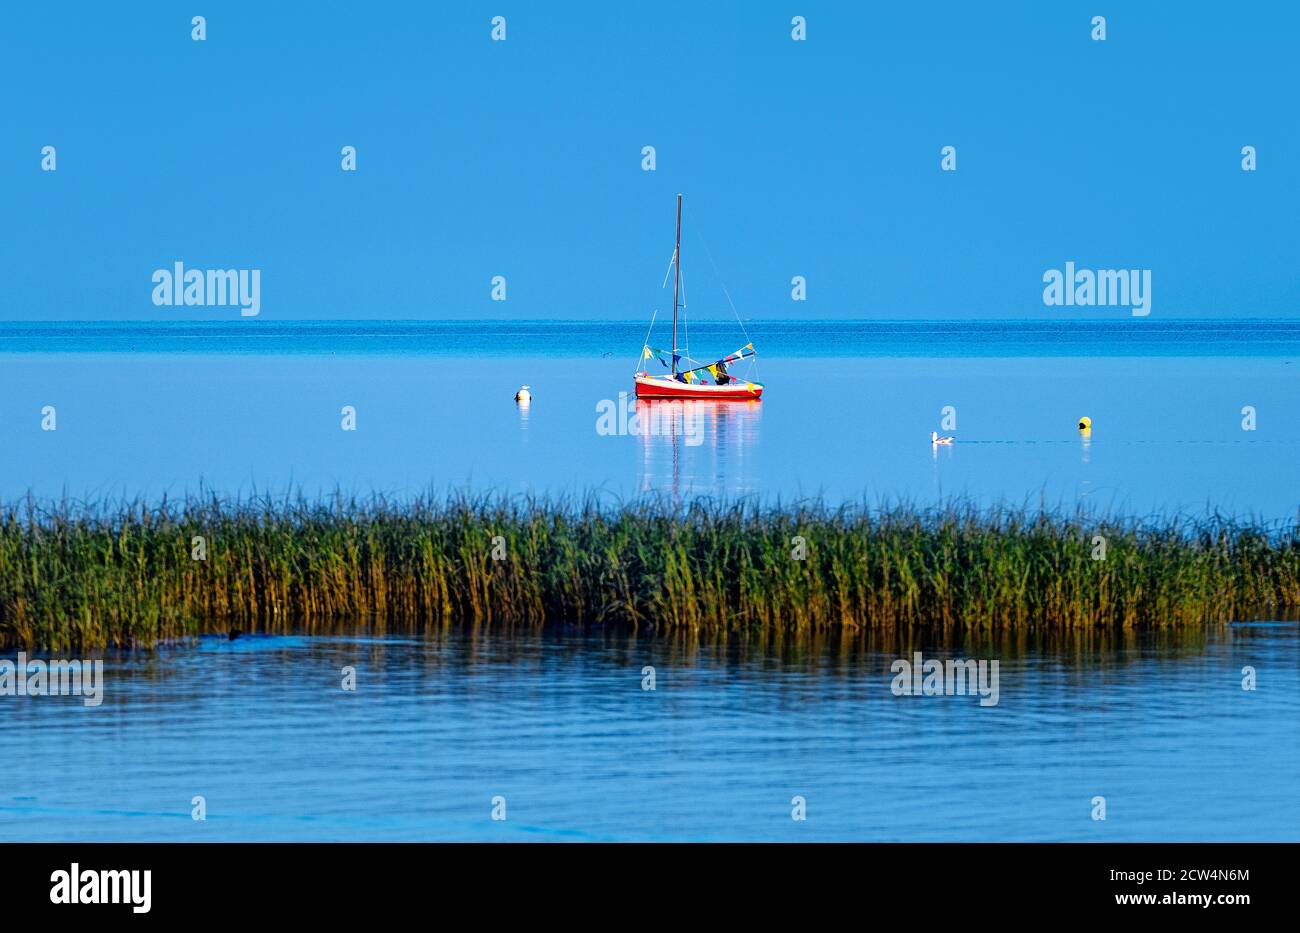 Red sailboat at Robbins Hill Beach, Brewster, Cape Cod, Massachusetts, USA. Stock Photo